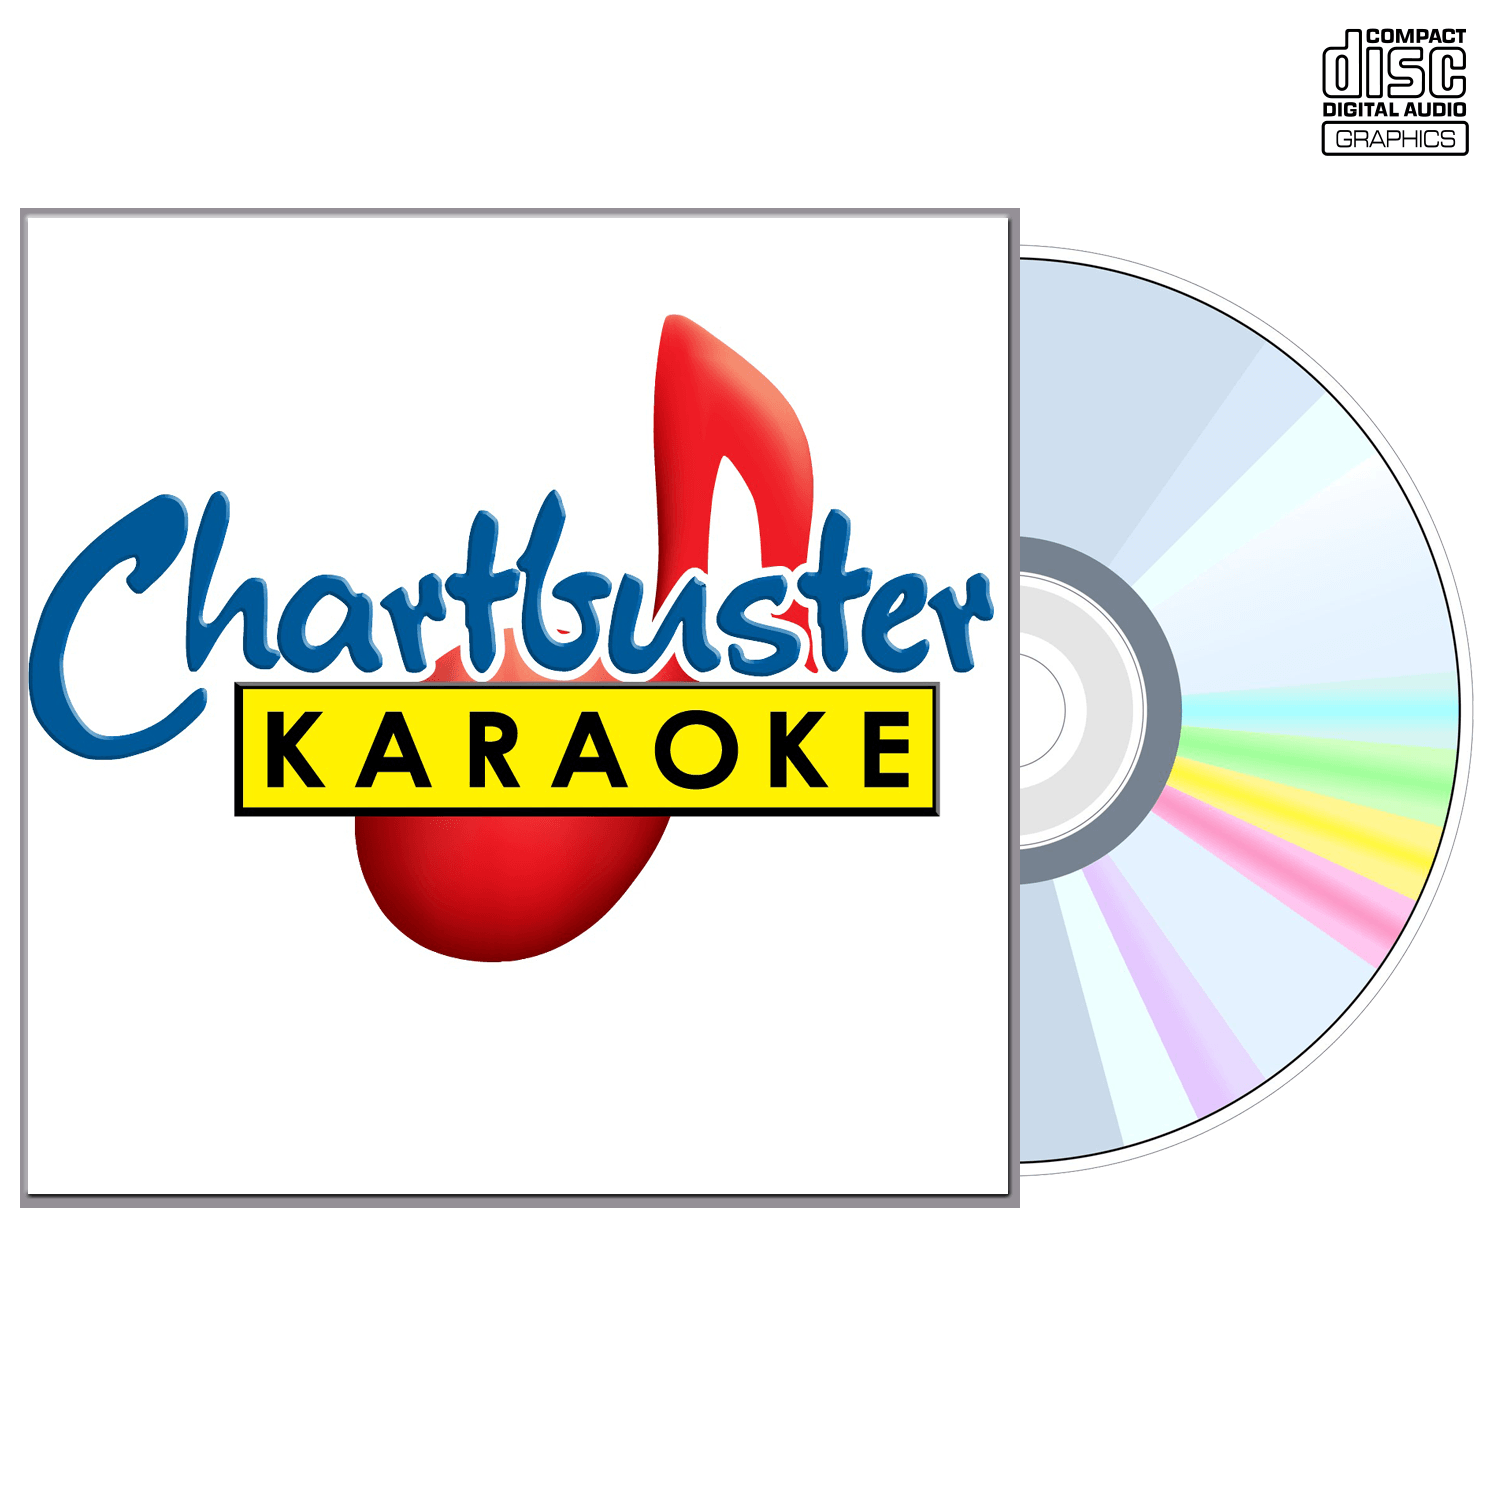 Jessica Simpson - CD+G - Chartbuster Karaoke - Karaoke Home Entertainment